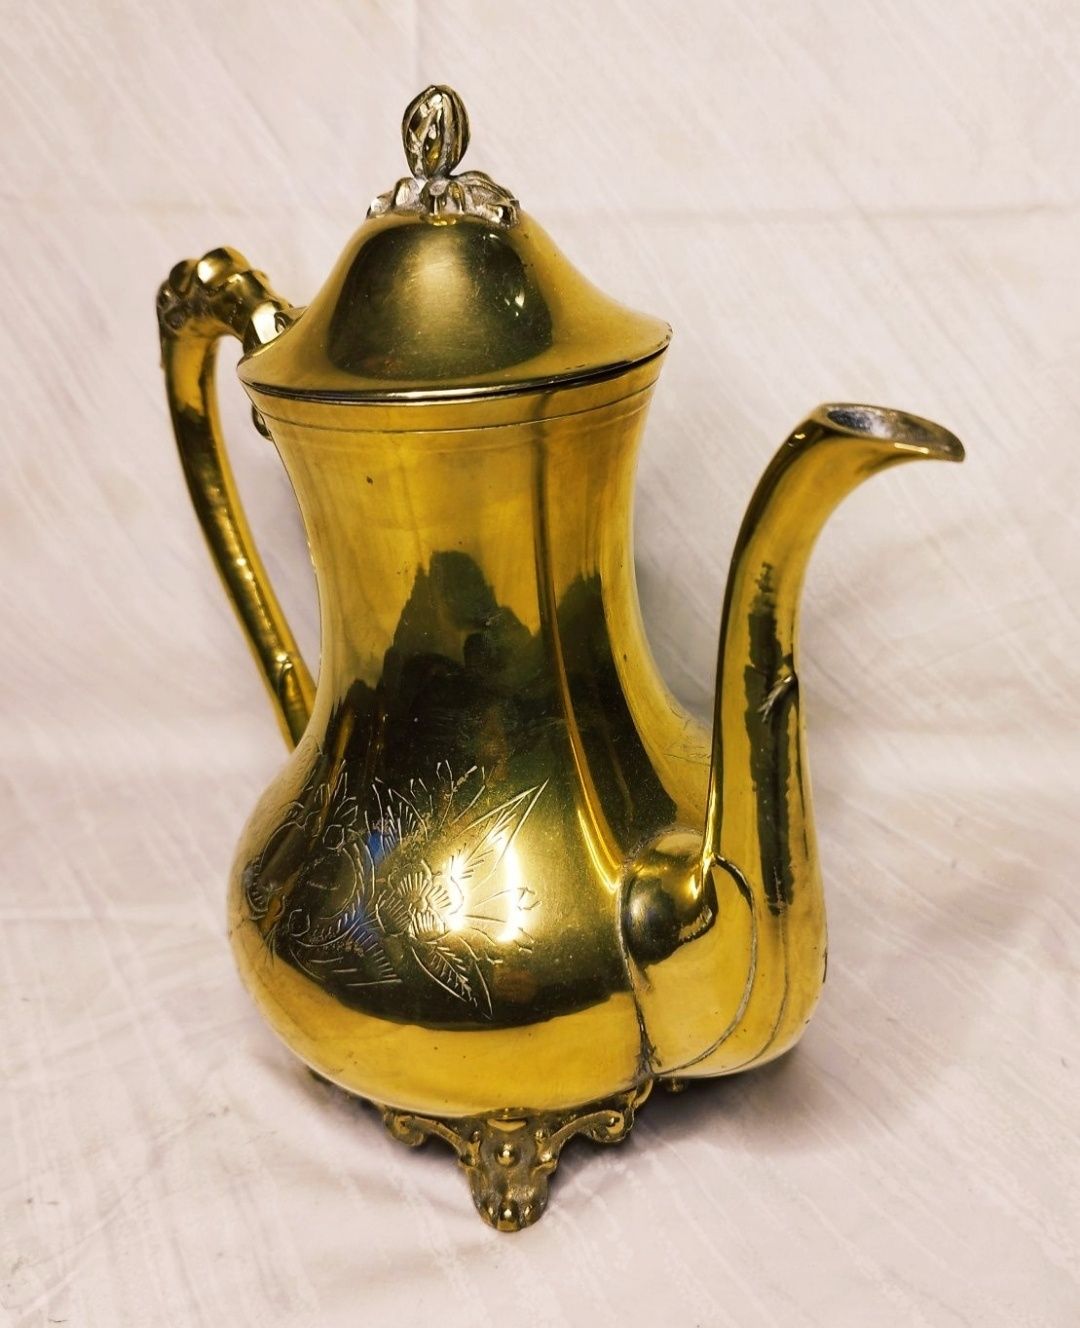 Ceainic vintage din bronz, epoca victoriana, 22cm.

Dimensiuni:
Innalt